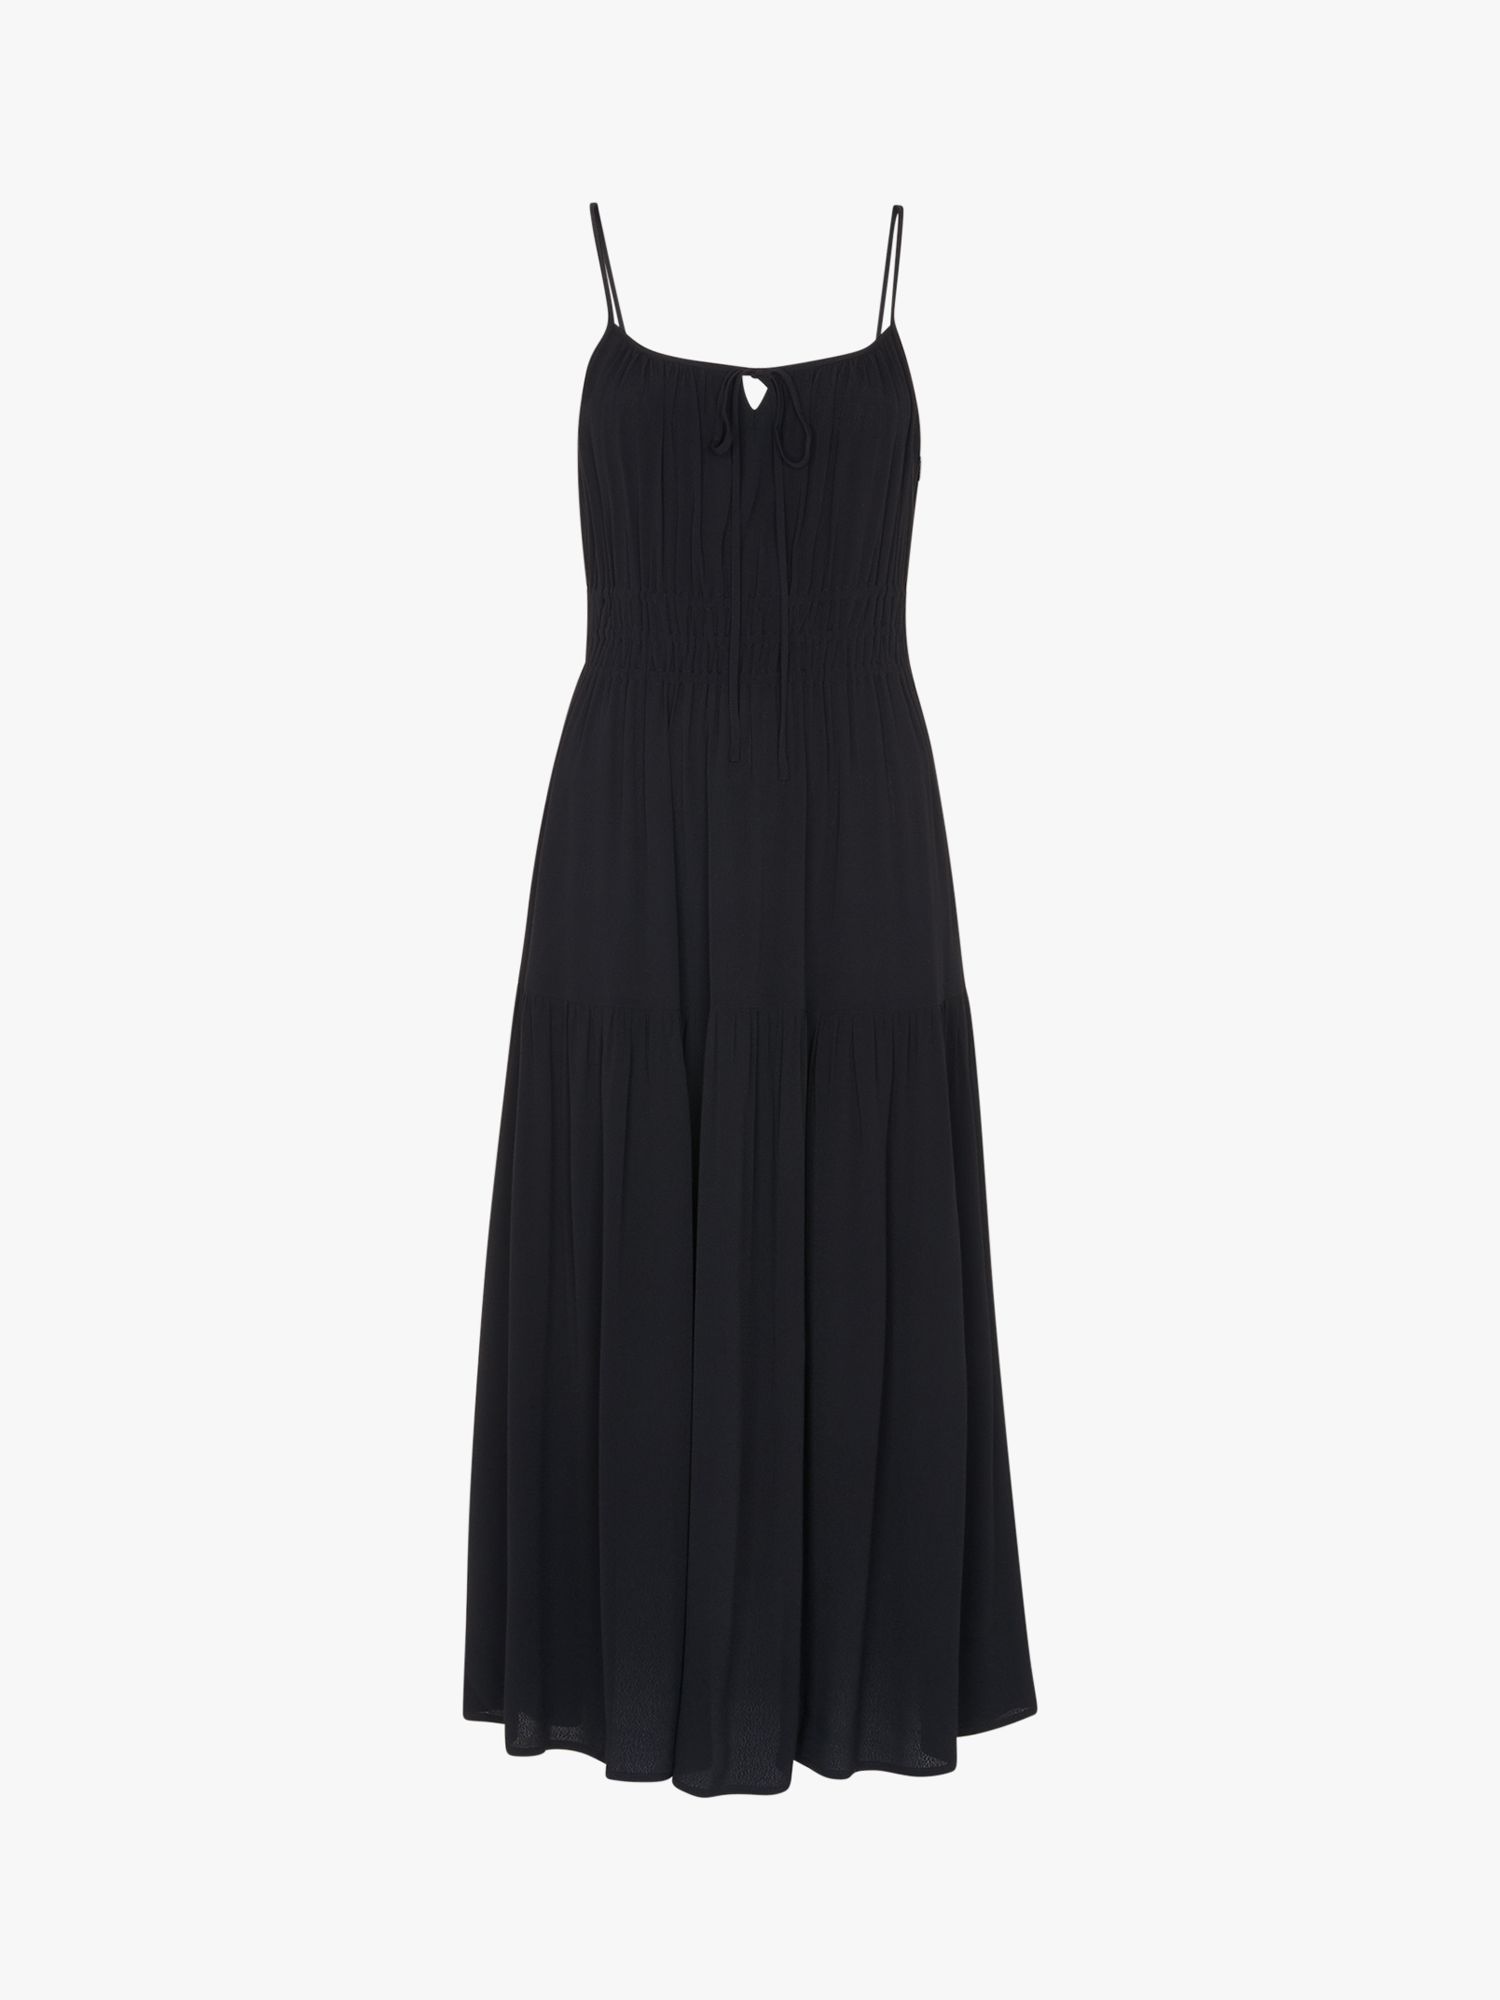 Whistles Gracie Crepe Smocked Midi Dress, Black at John Lewis & Partners